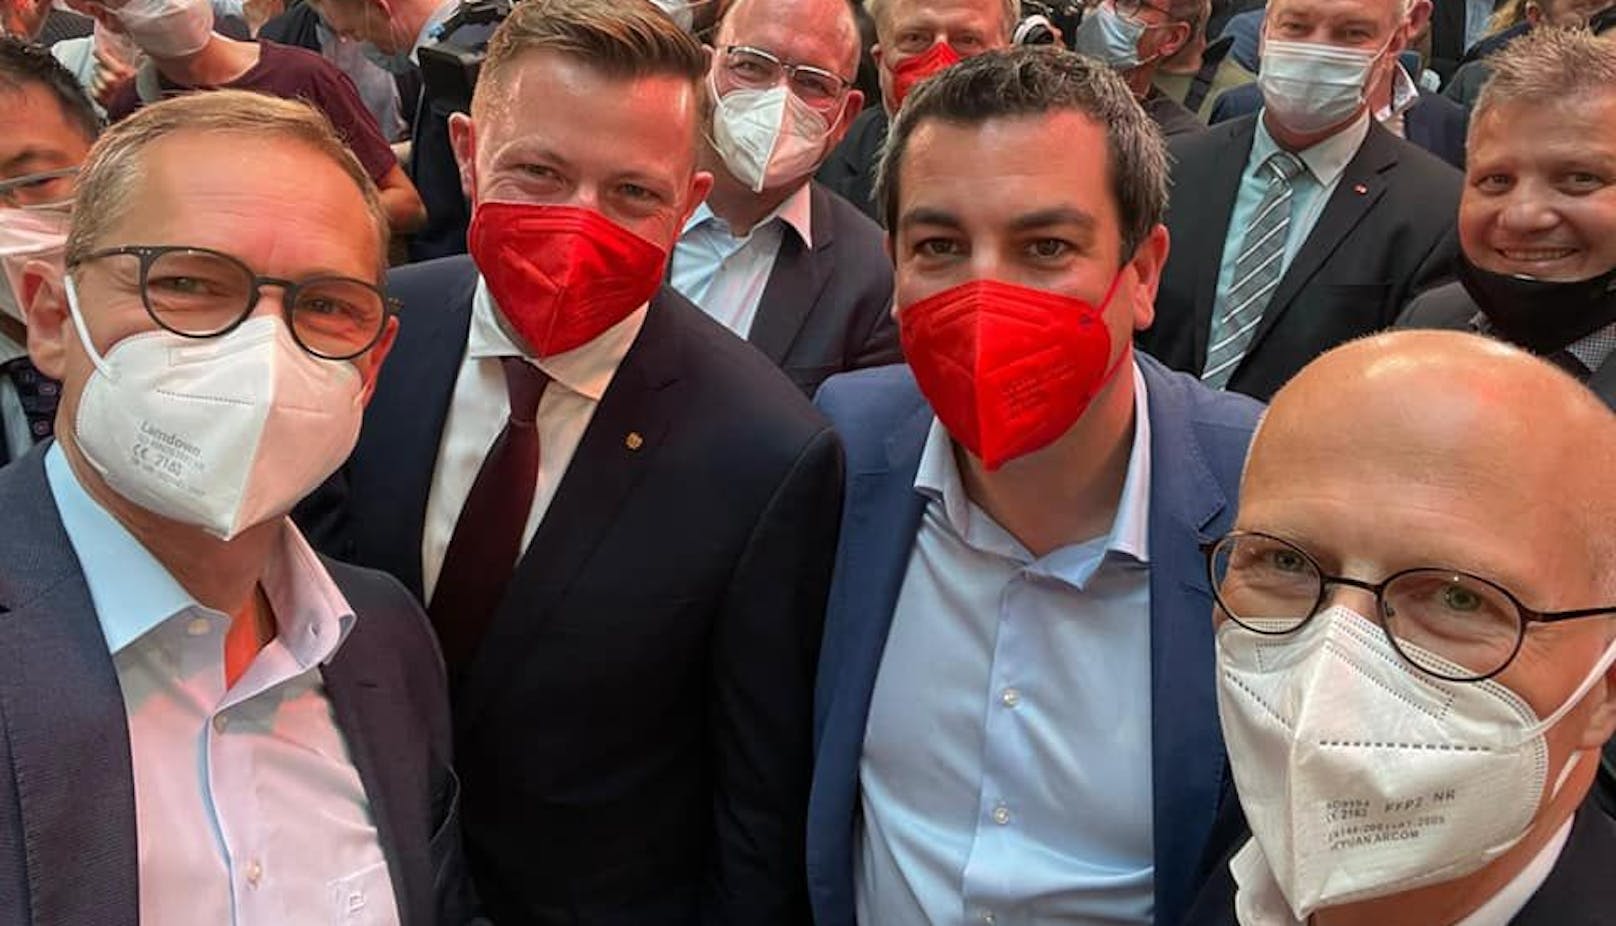 Selfie mit dem Hamburger Bürgermeister Peter Tschentscher, dem Berliner Bürgermeister Michael Müller und dem Wiener Landtagsabgeordneten Marcus Schober.